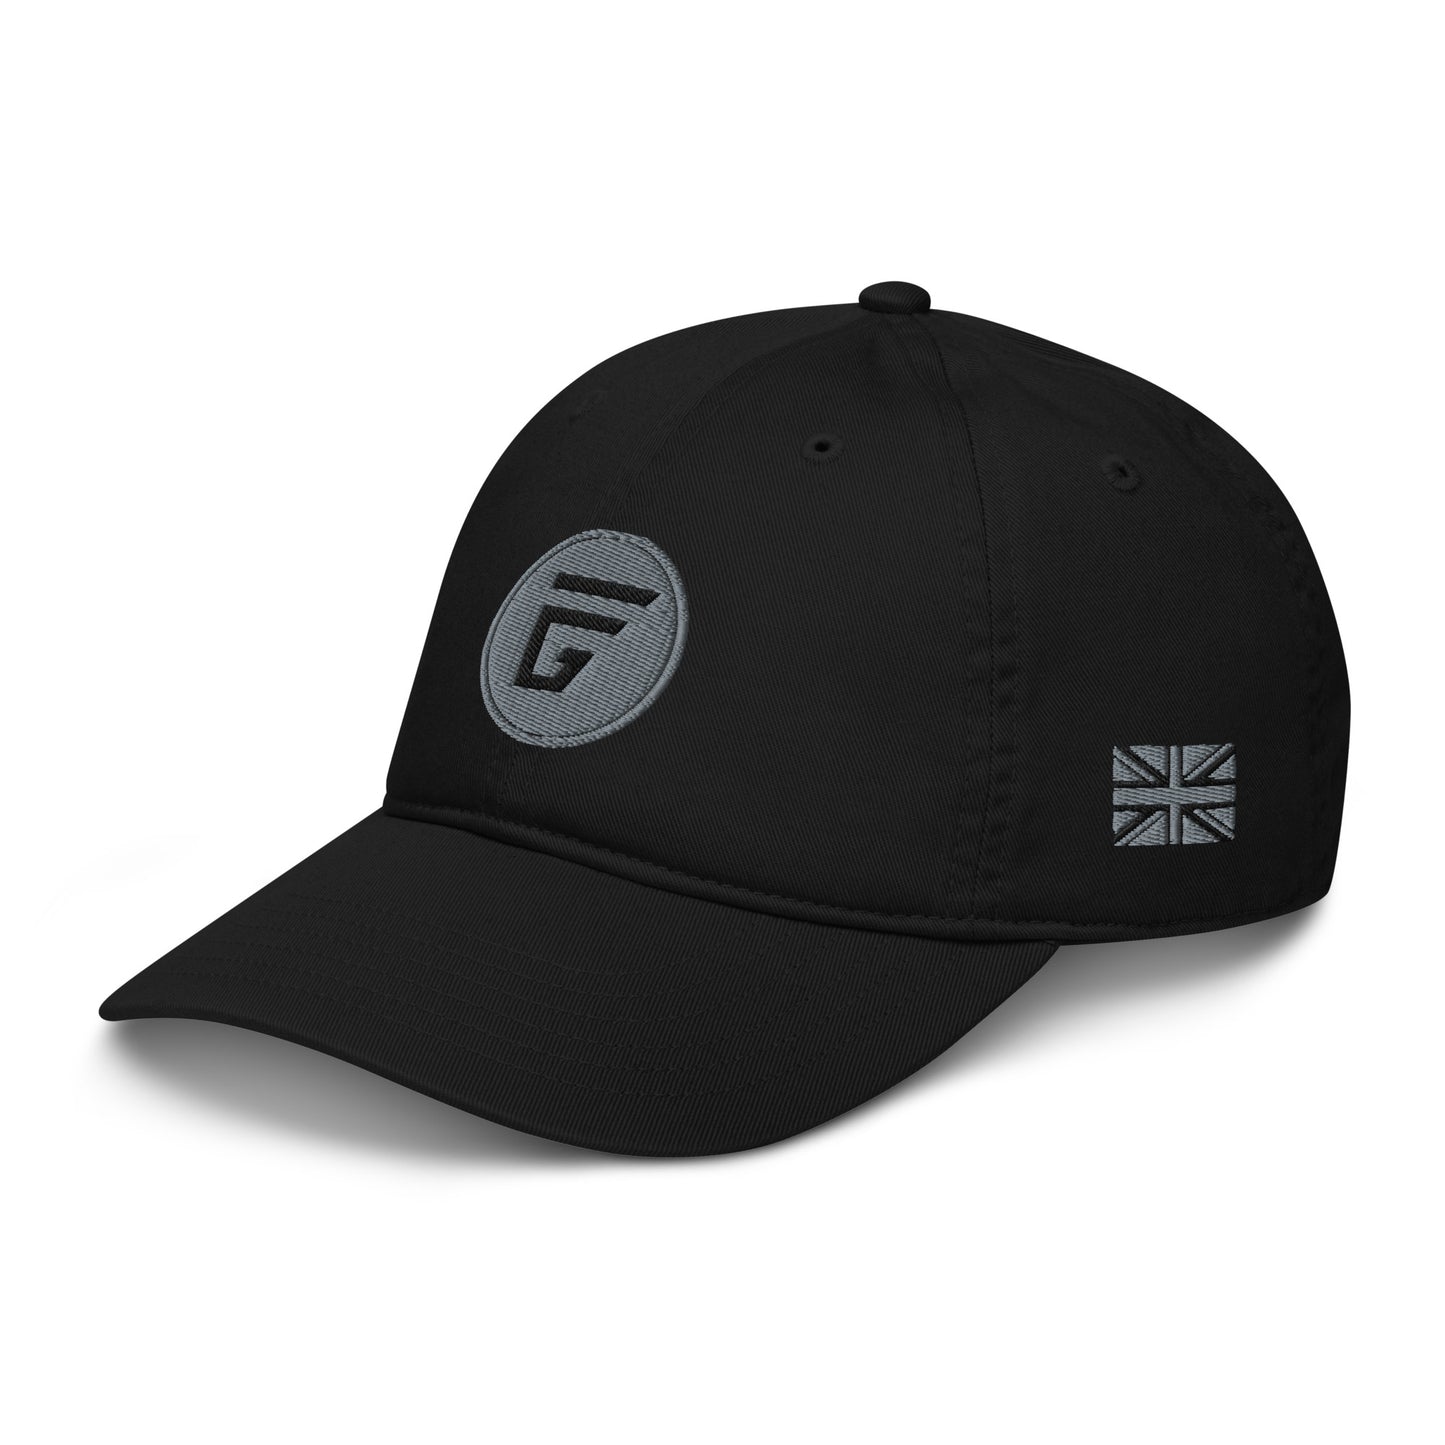 G-FORCE APPAREL GBR Edition CAP